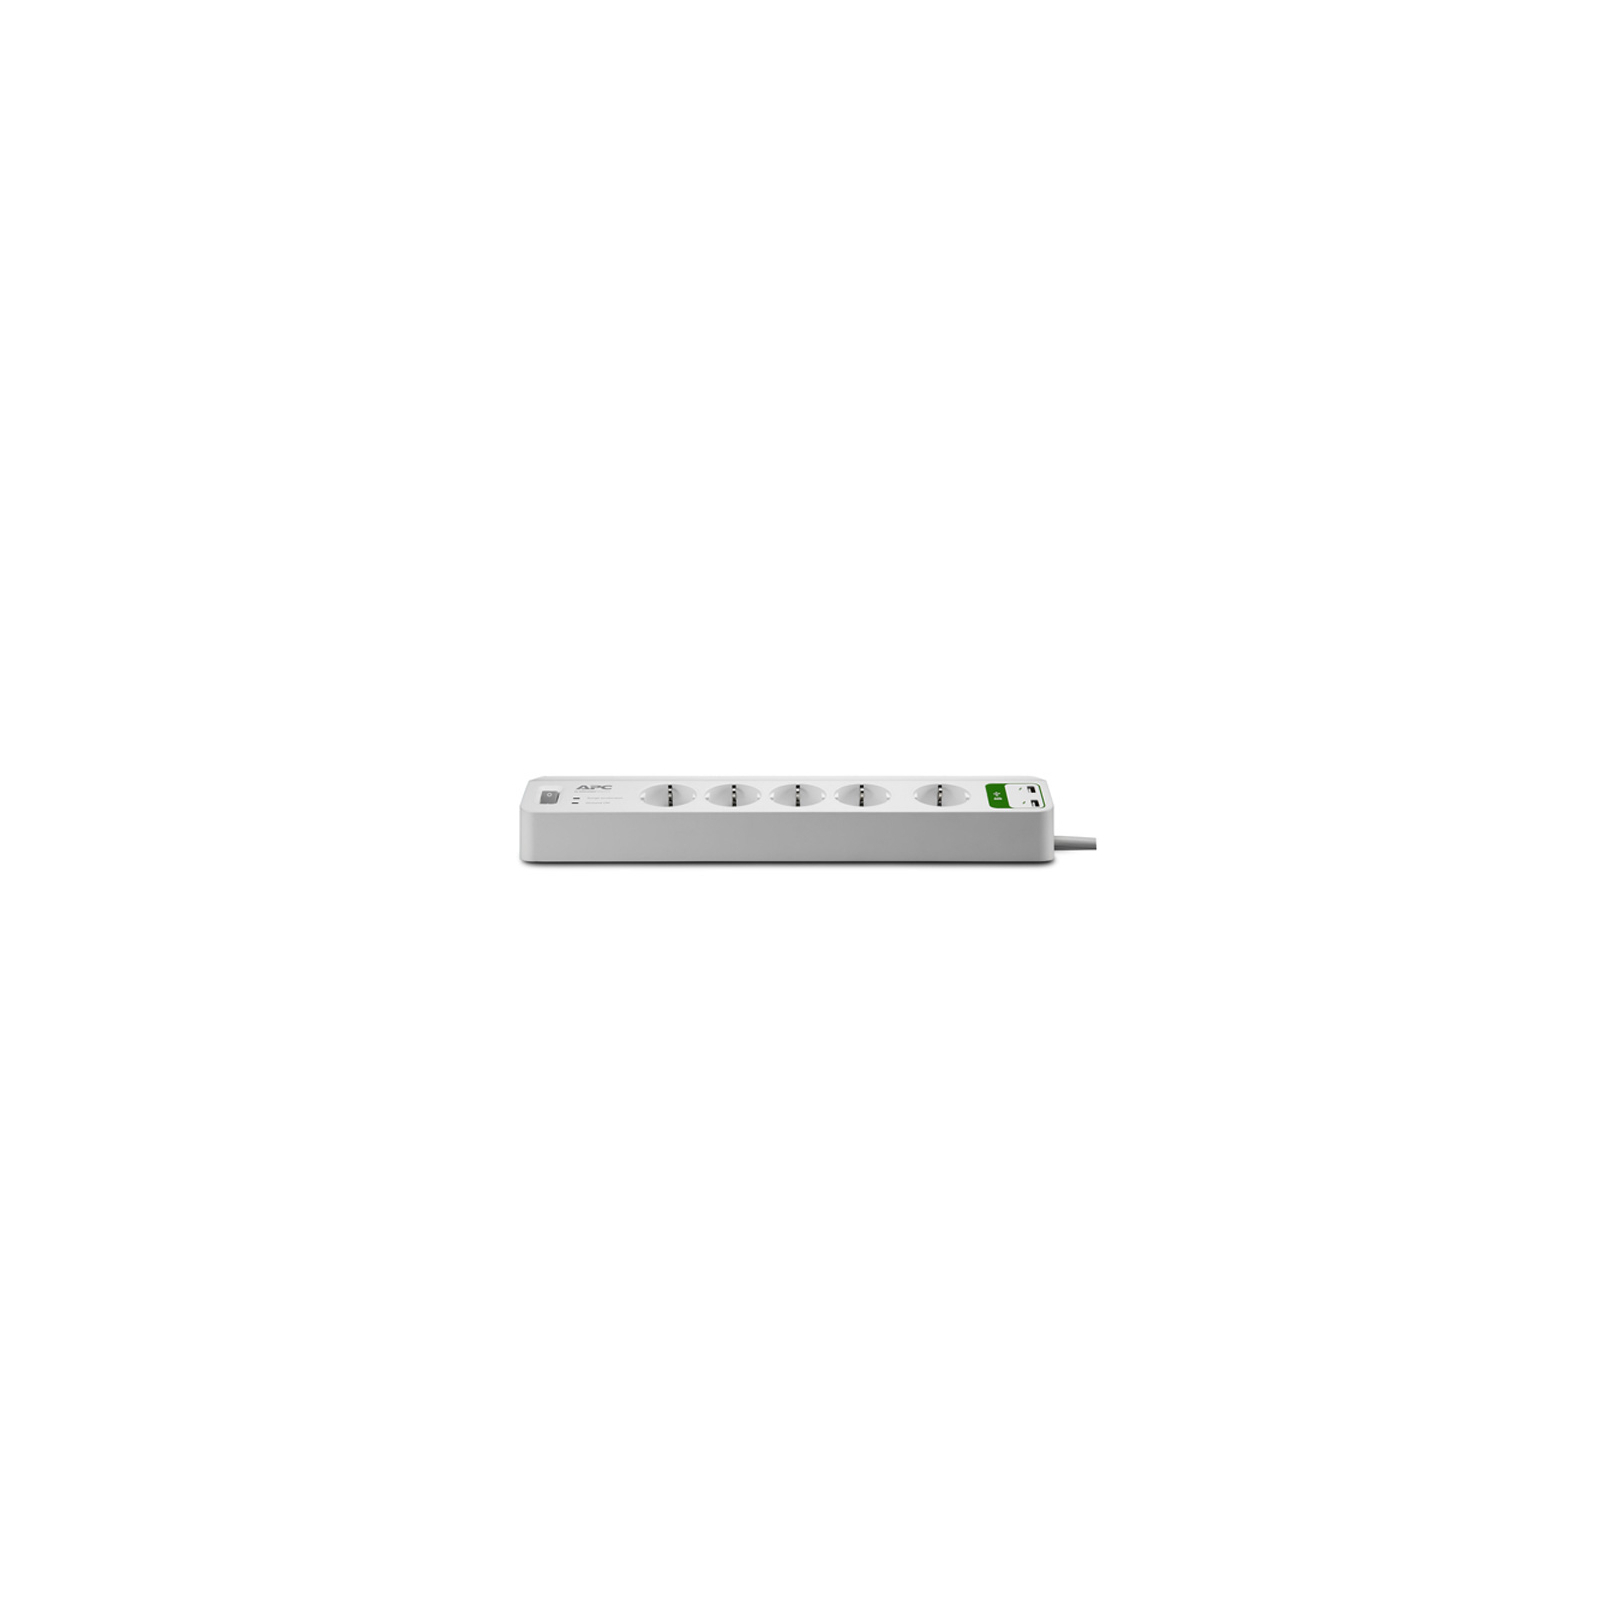 Сетевой фильтр питания APC Essential SurgeArrest 5 outlets ++ 2 USB (5V, 2.4A) (PM5U-RS) изображение 2